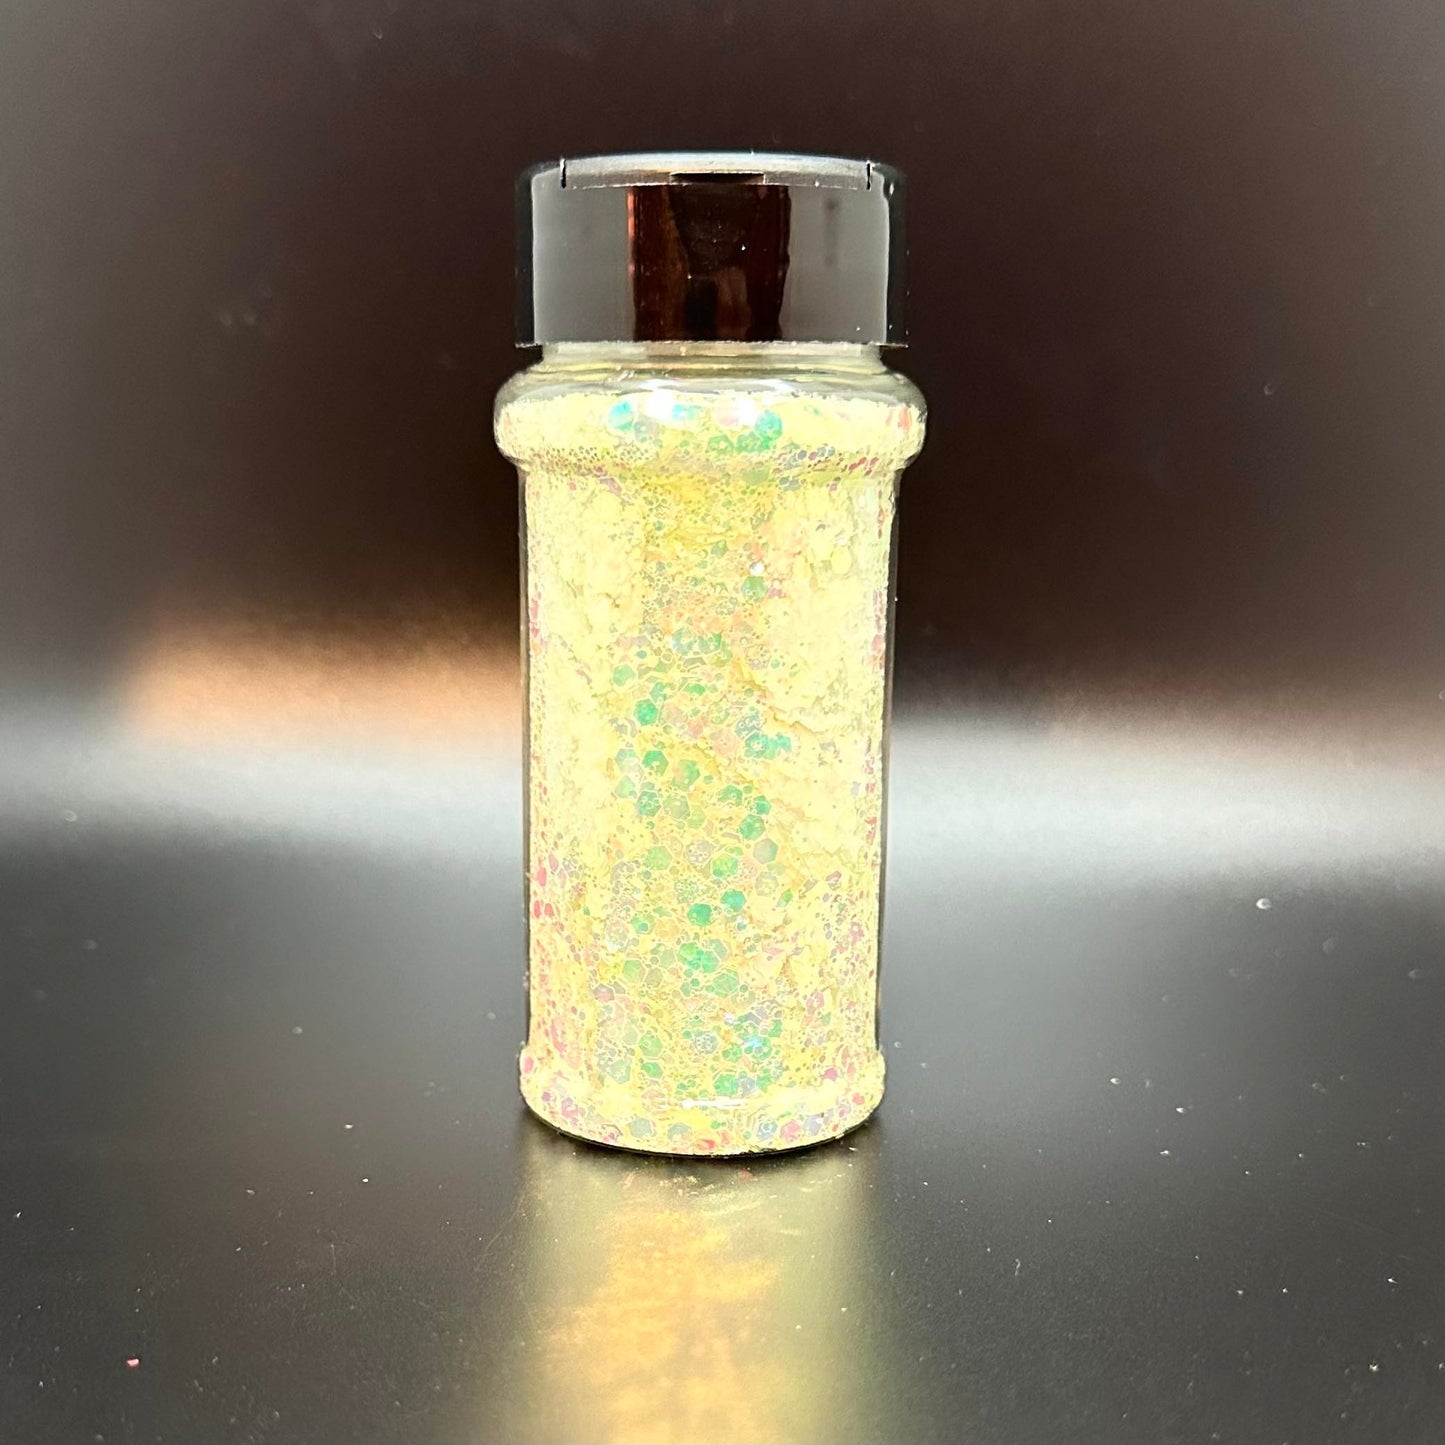 Brilliance Chunky Mix Opal Glitter